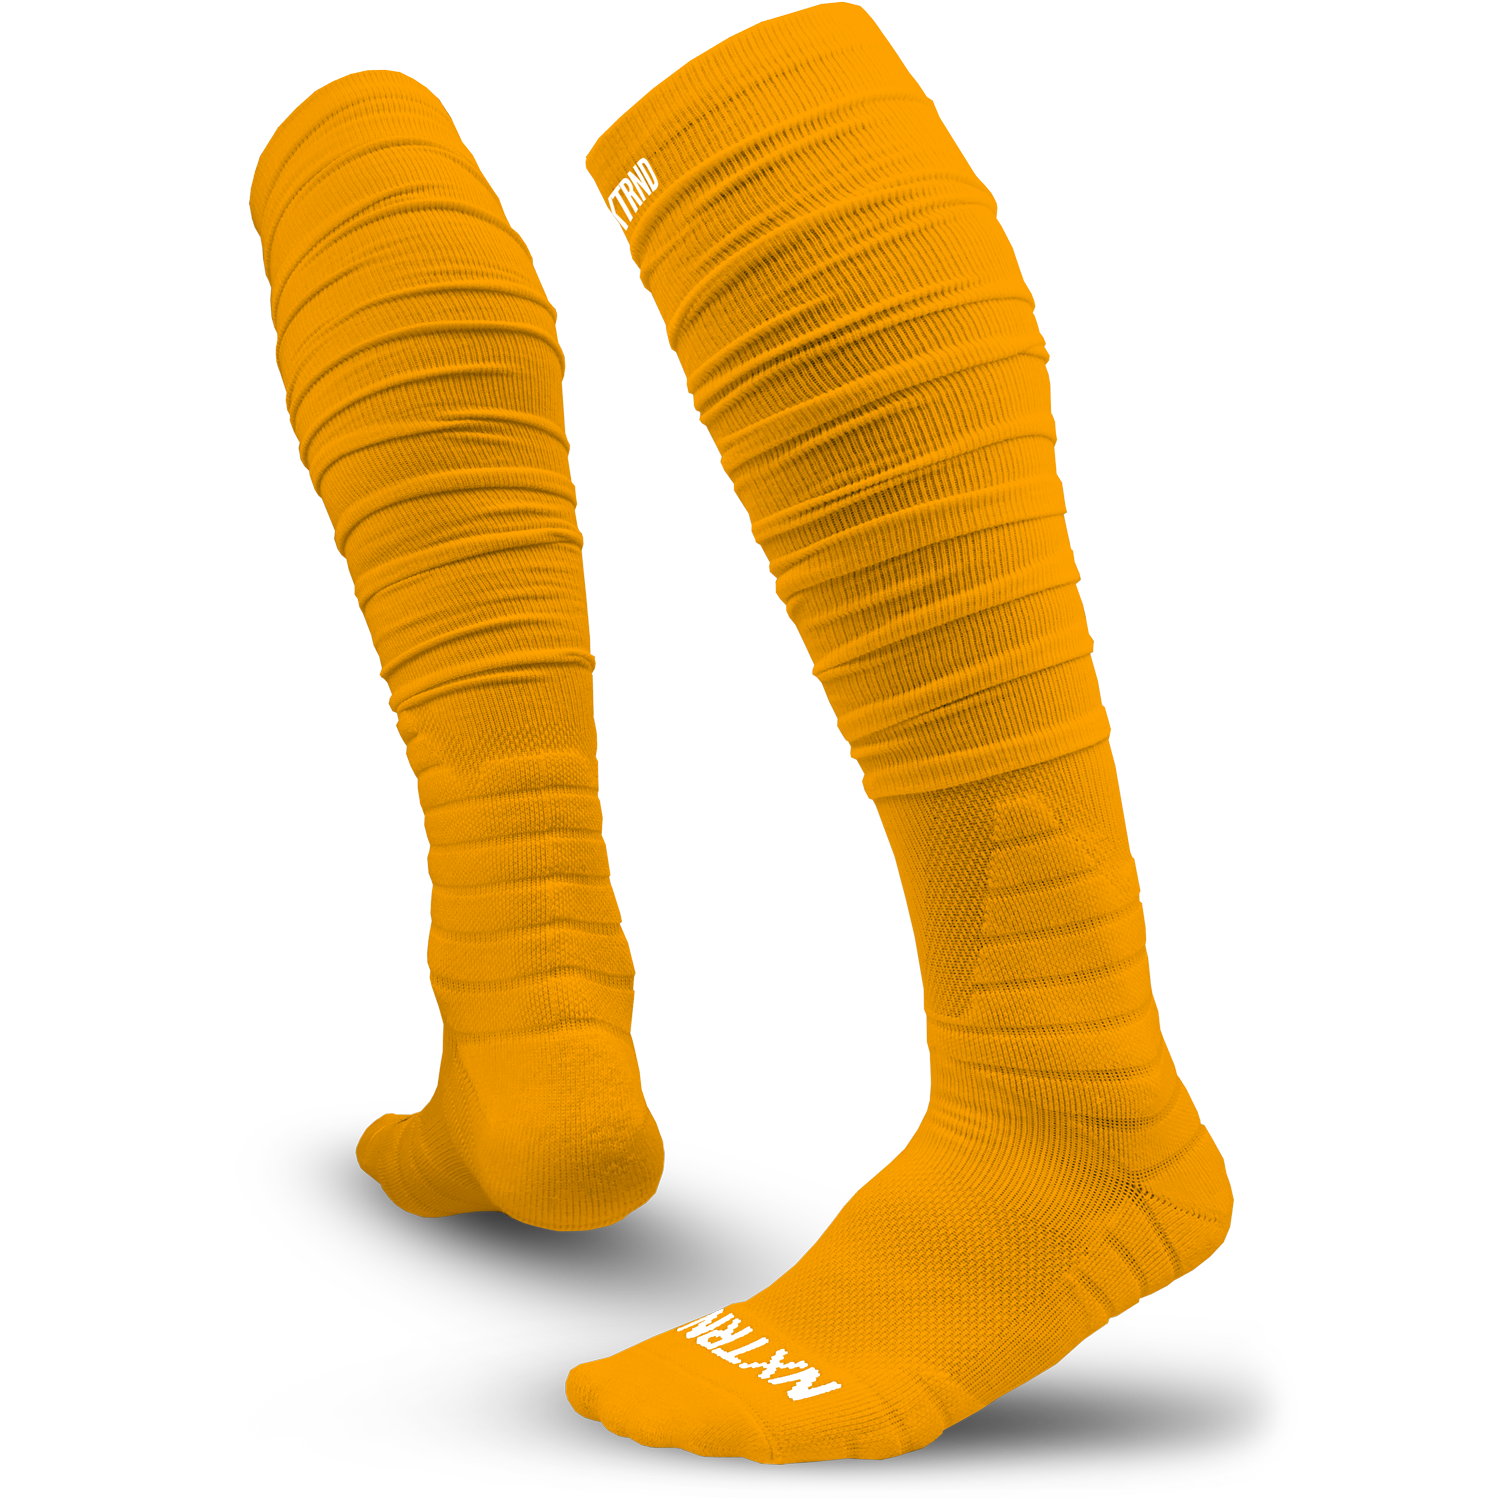 Classic Yellow Team Sock, Knee High Football Socks